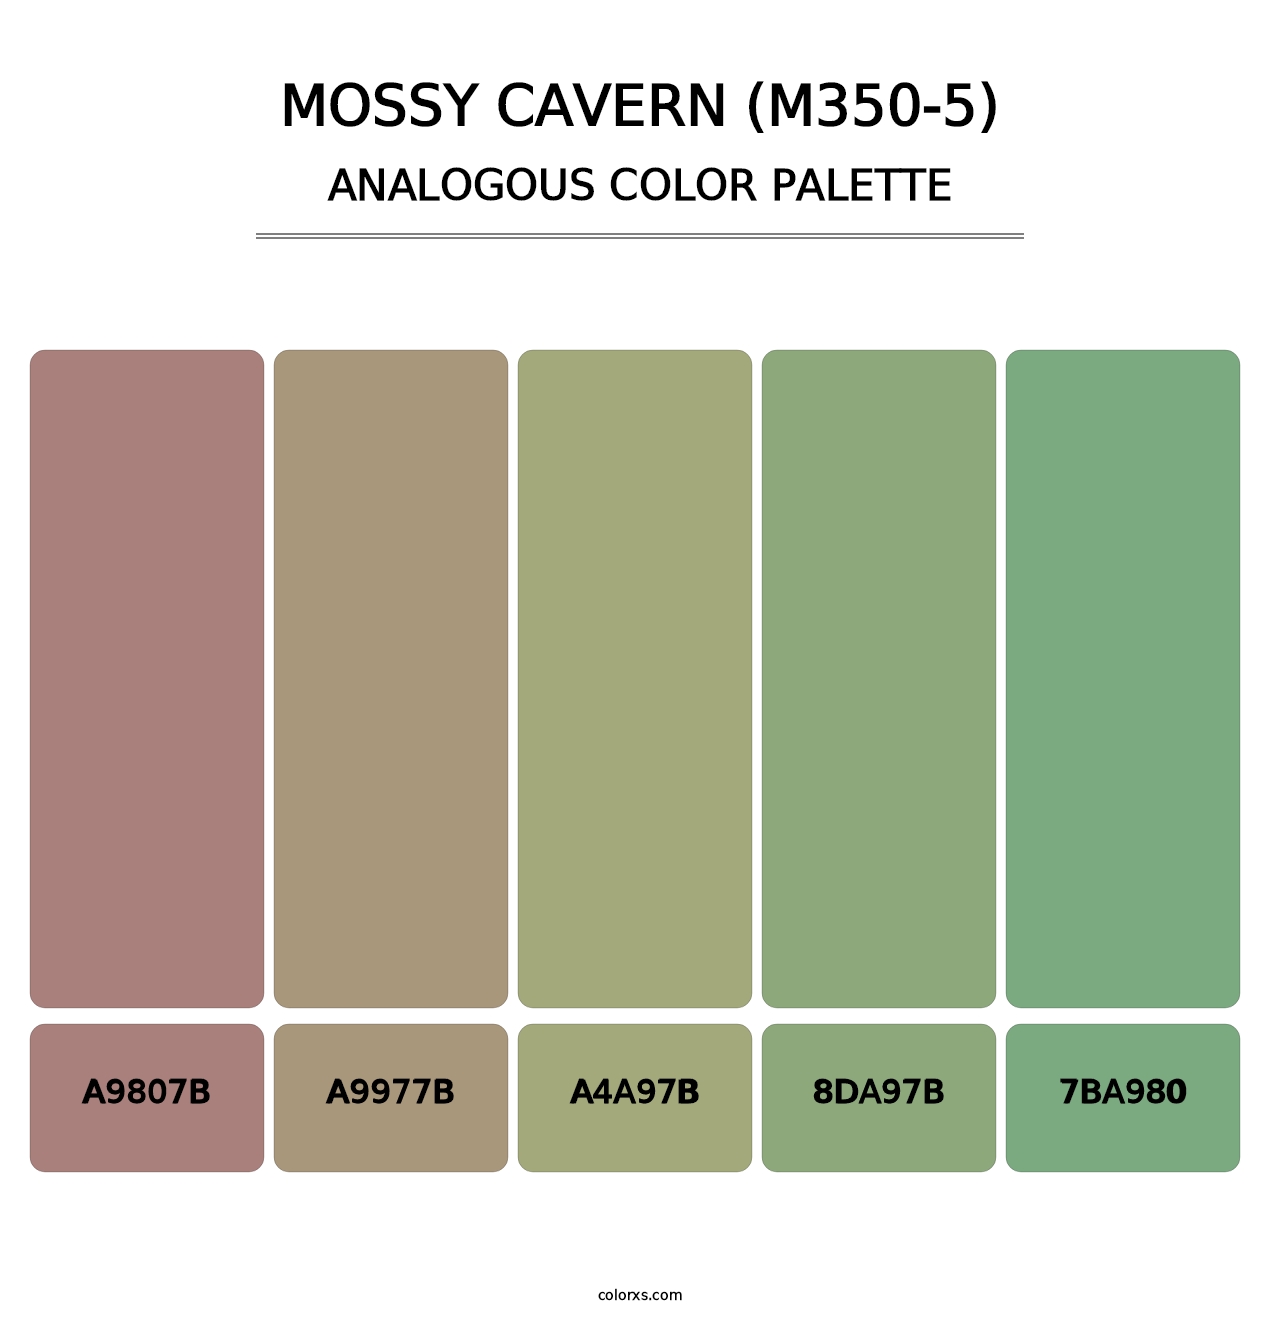 Mossy Cavern (M350-5) - Analogous Color Palette